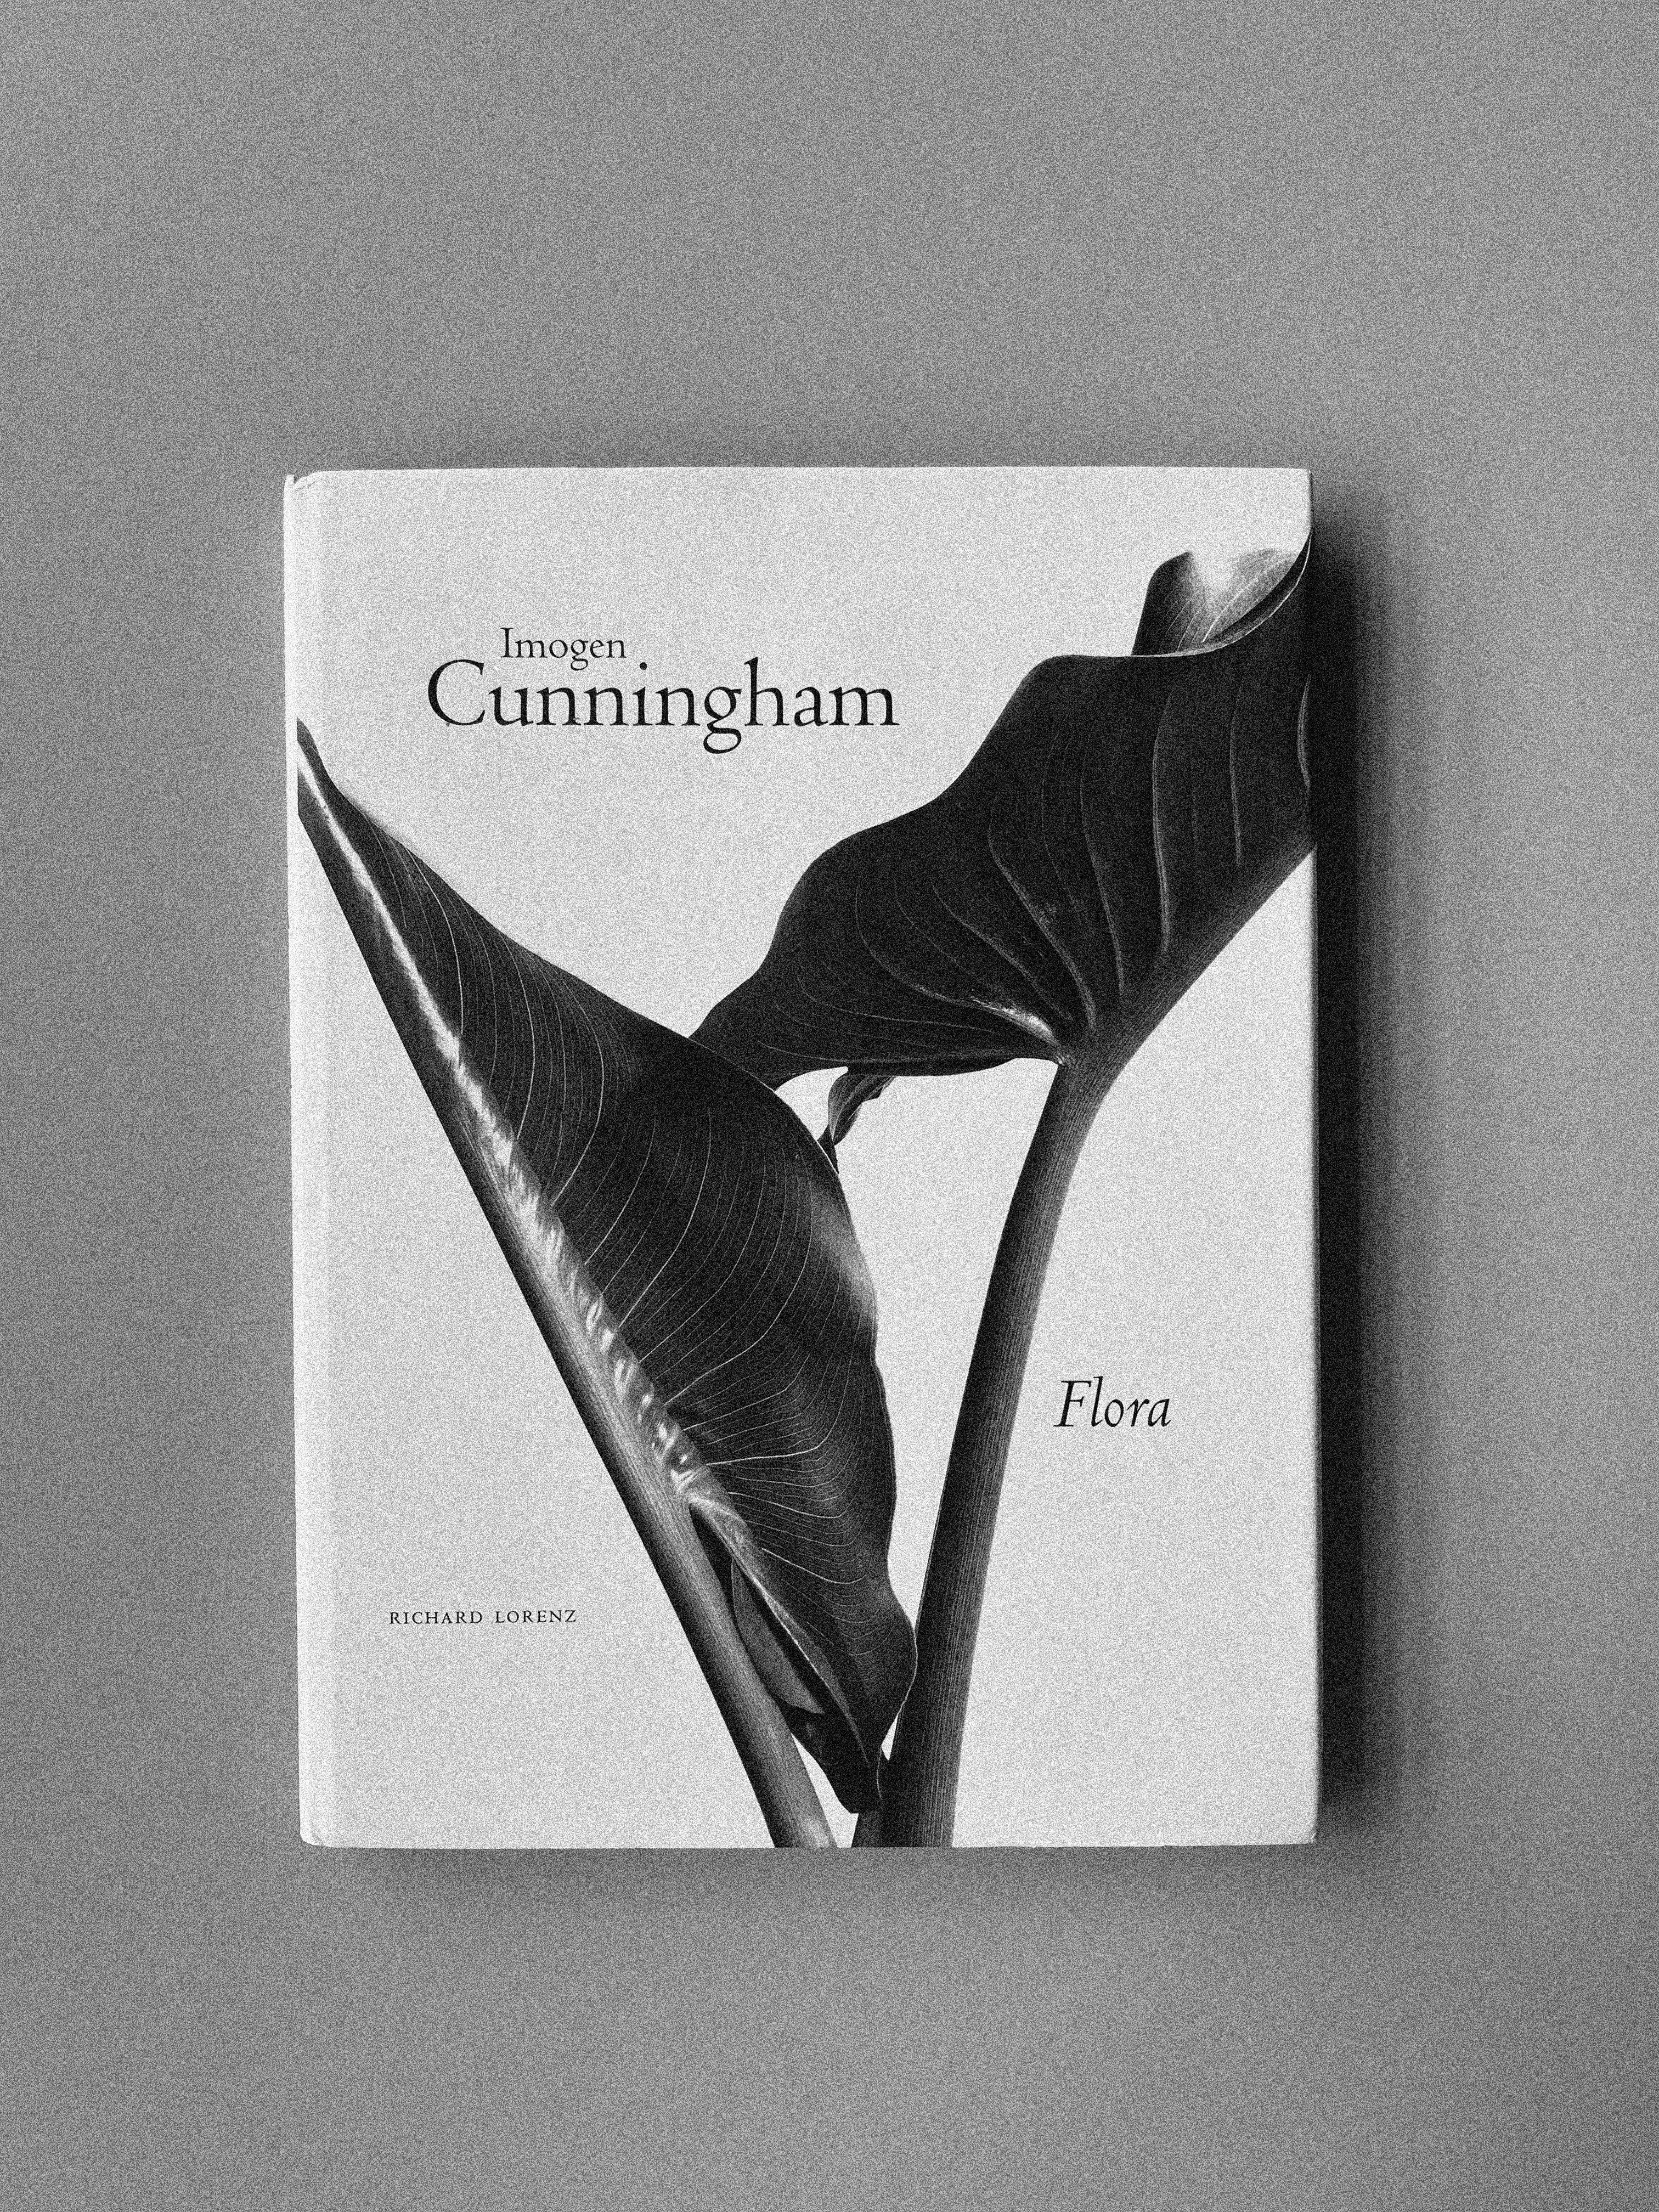 Imogen Cunningham: On the Body — Alice's Book Shelf